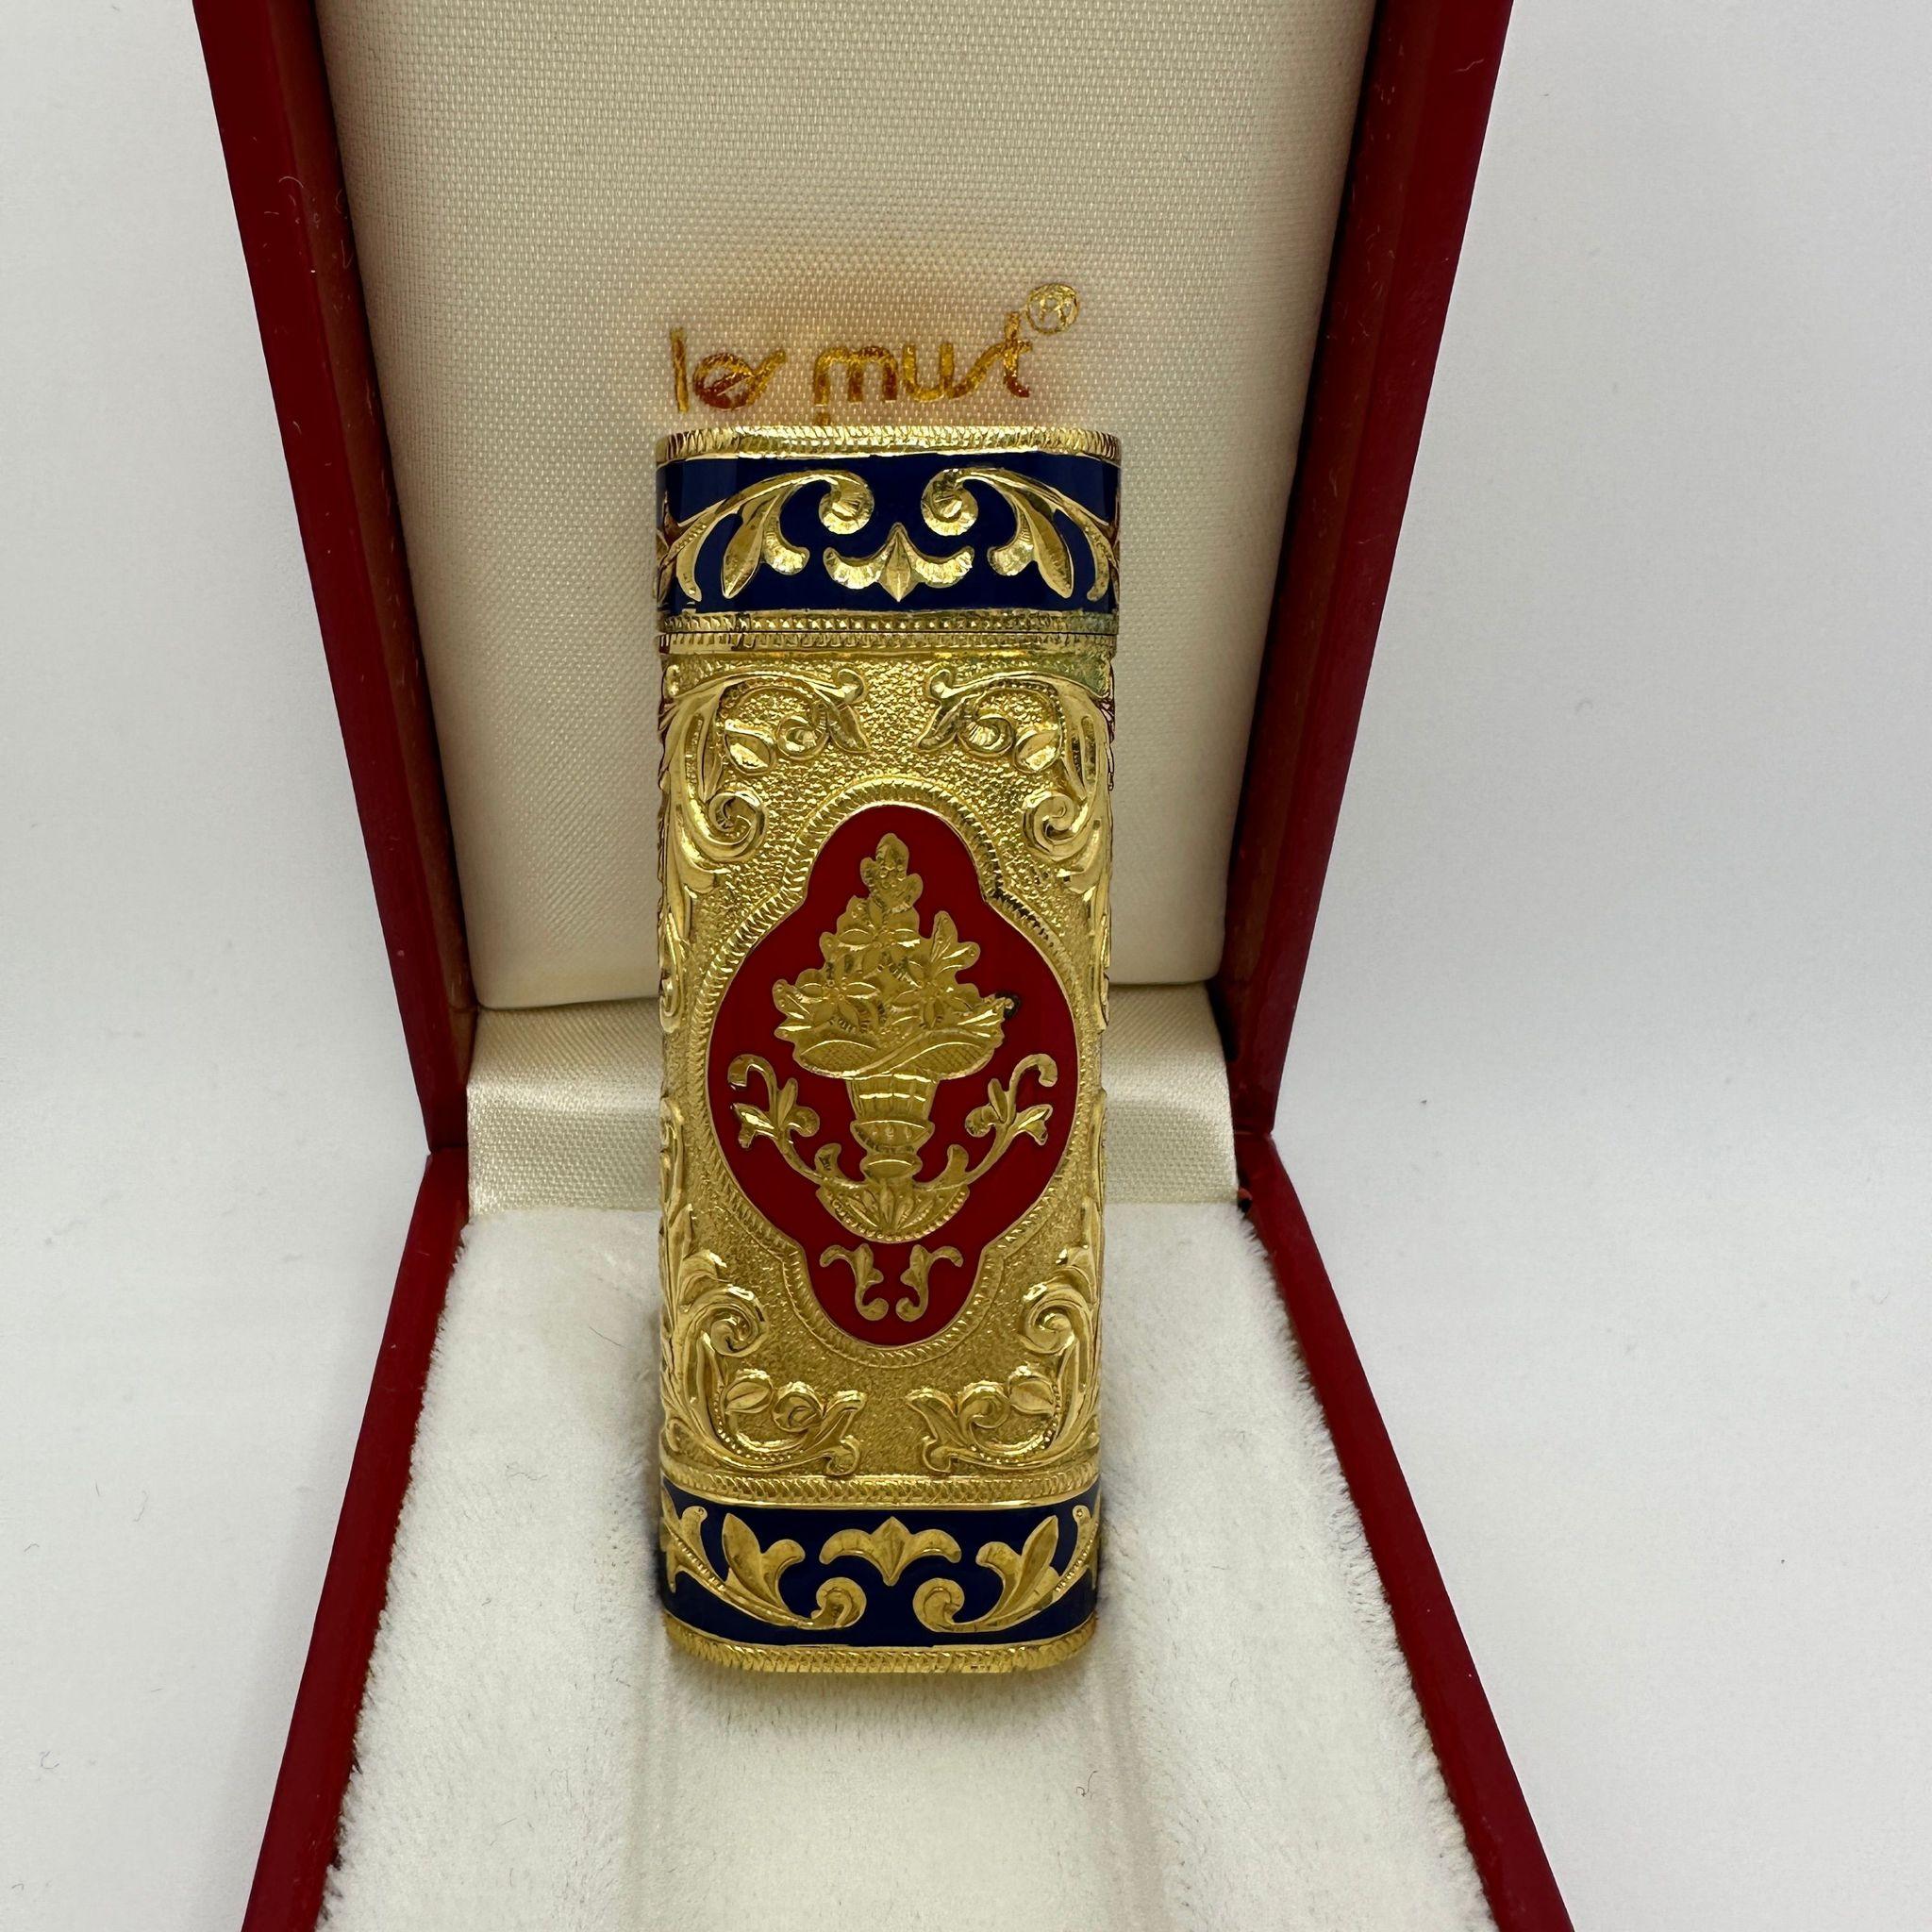 Le Must de Cartier Very Rare Royking Lighter, 18k Gold Plating & Enamel Inlay  3